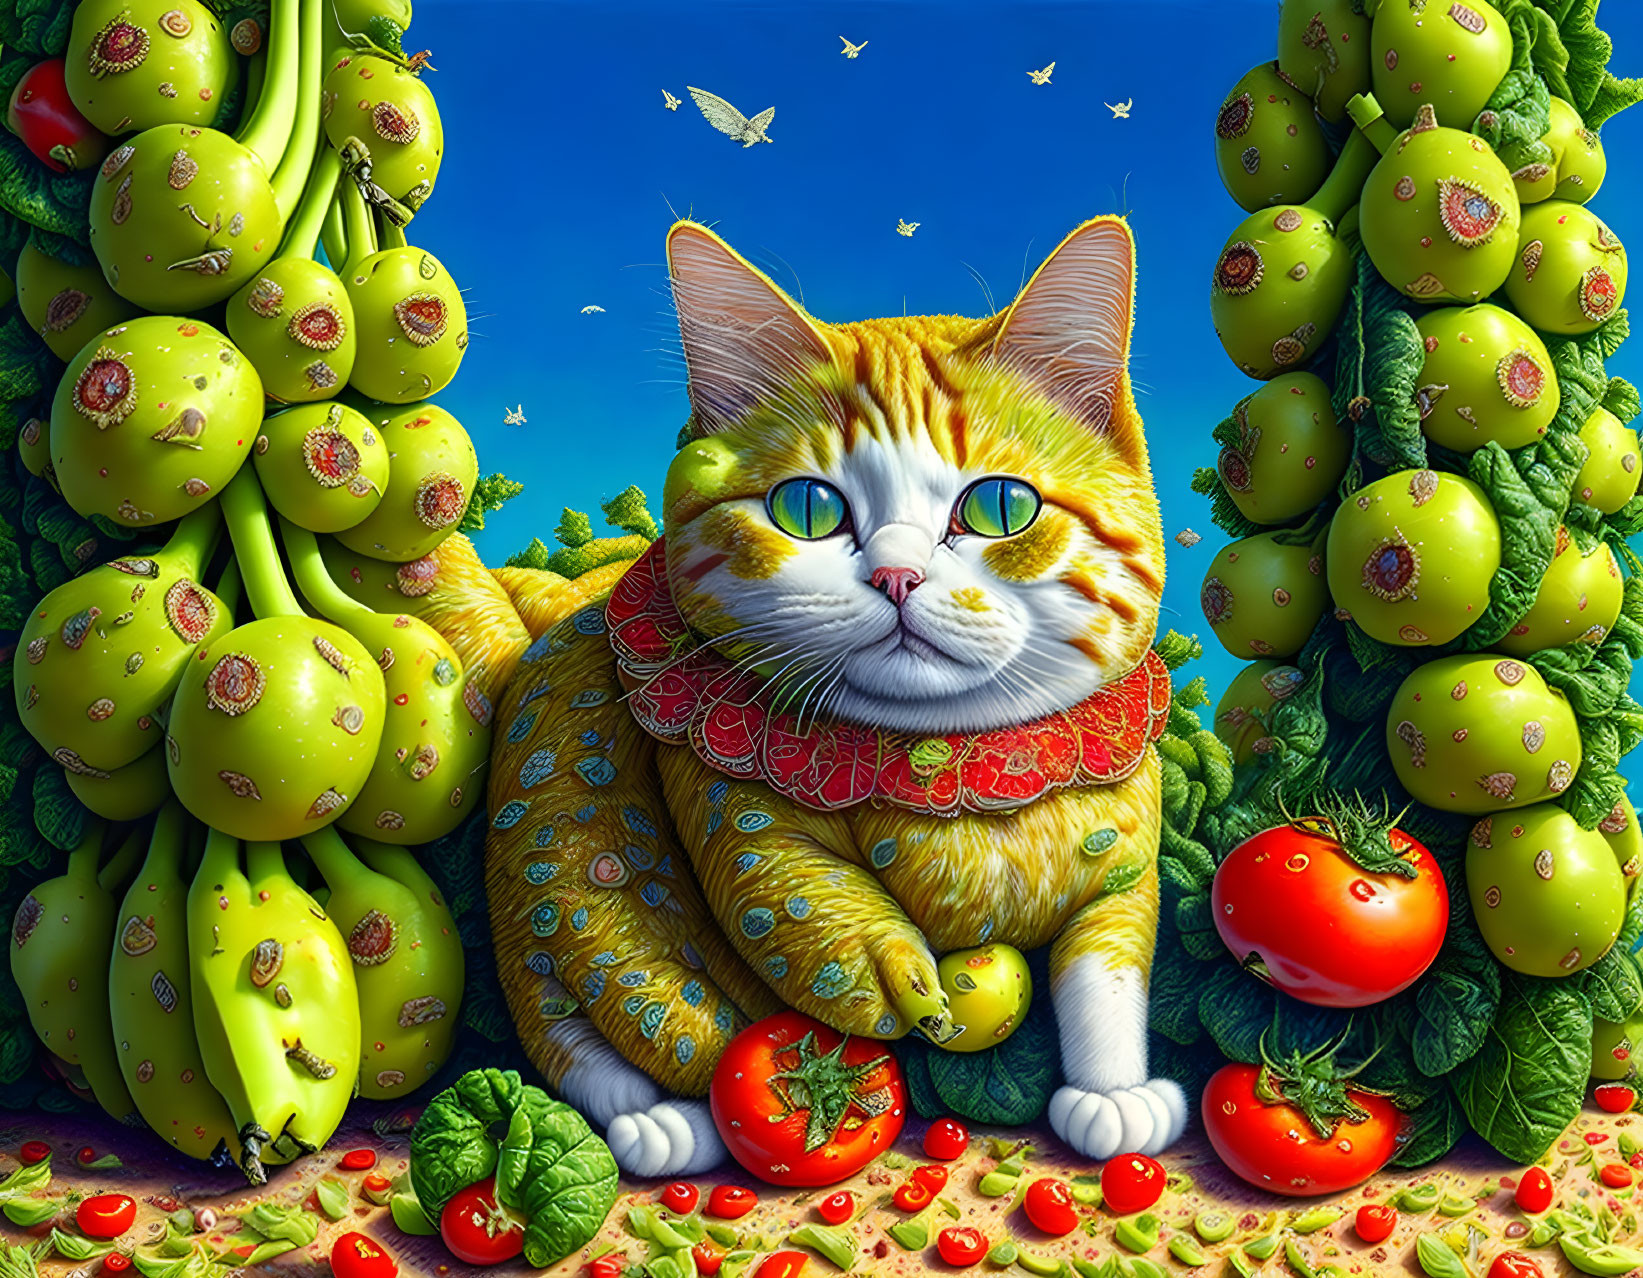 banana cat, tomato cat, lettuce cat, extreme detai